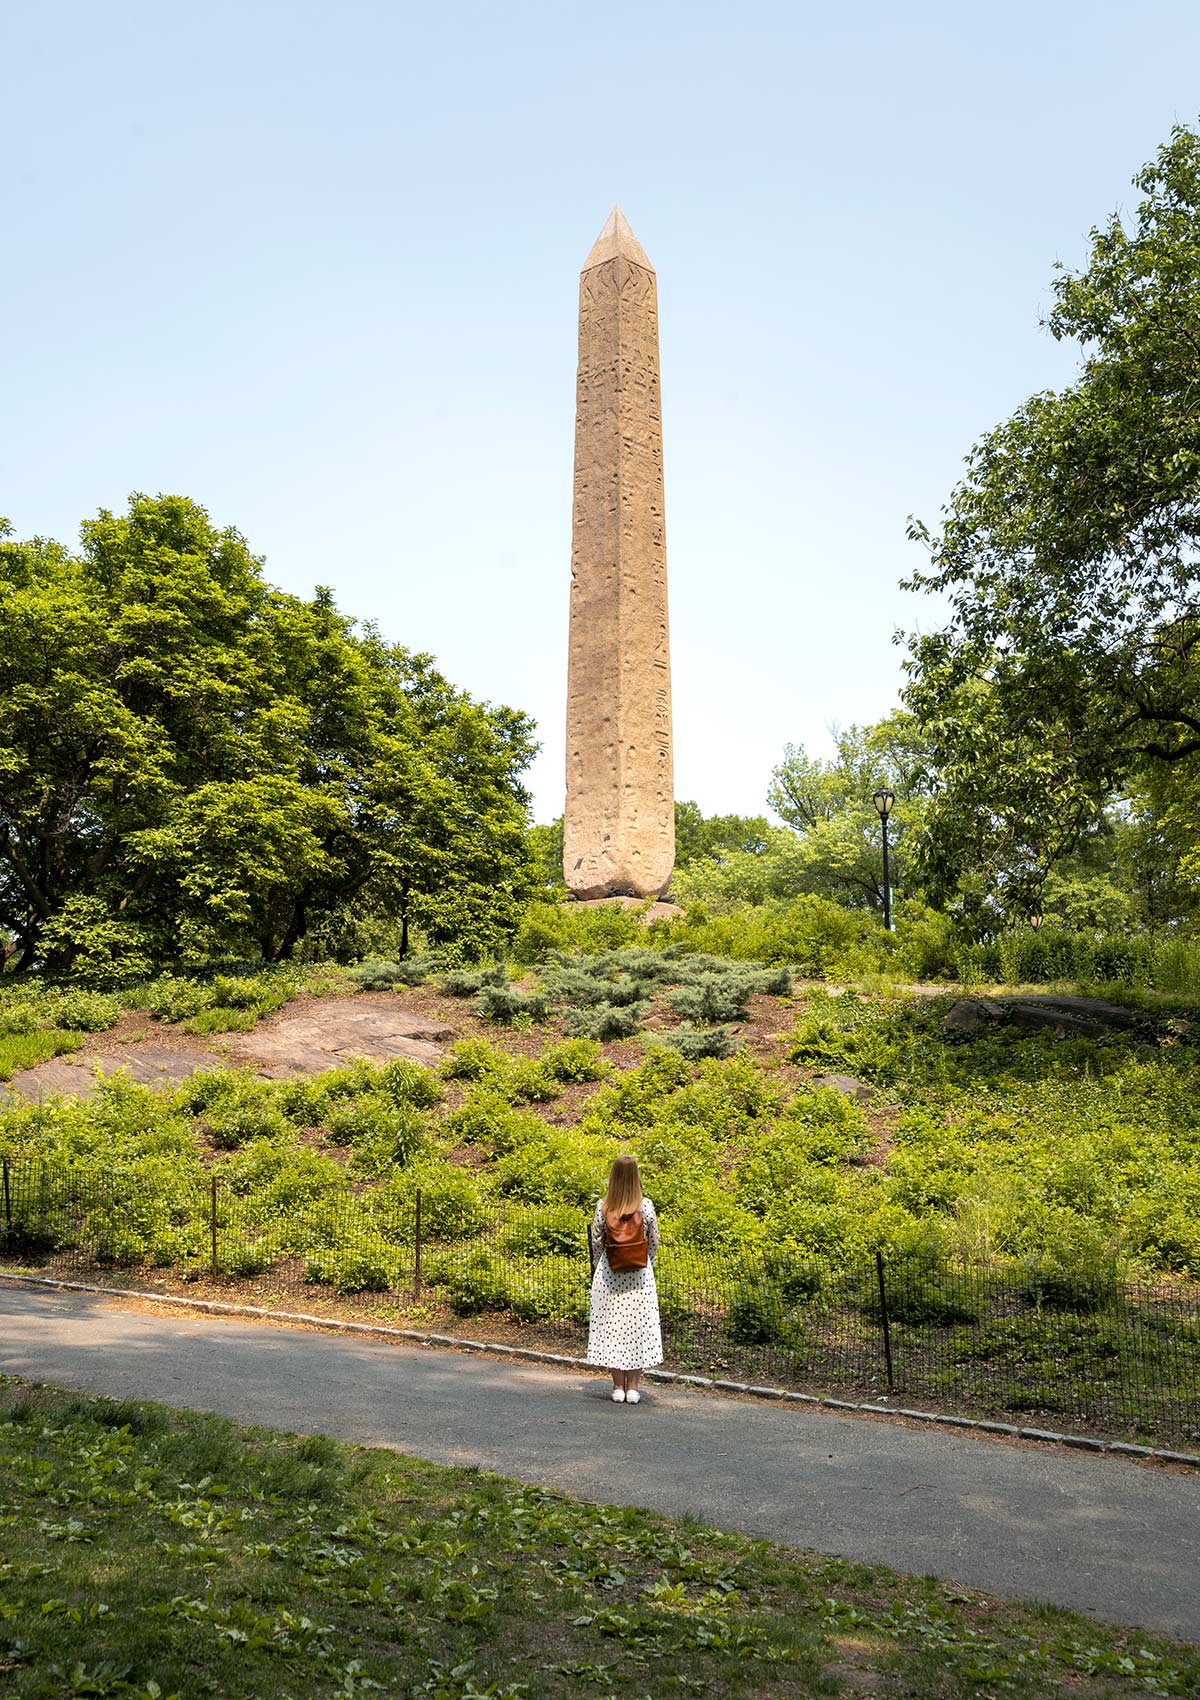 Obélisque, Parc de Central Park, New York, NY, États-Unis / Obelisk, Central Park, New York City, NYC, NY, USA